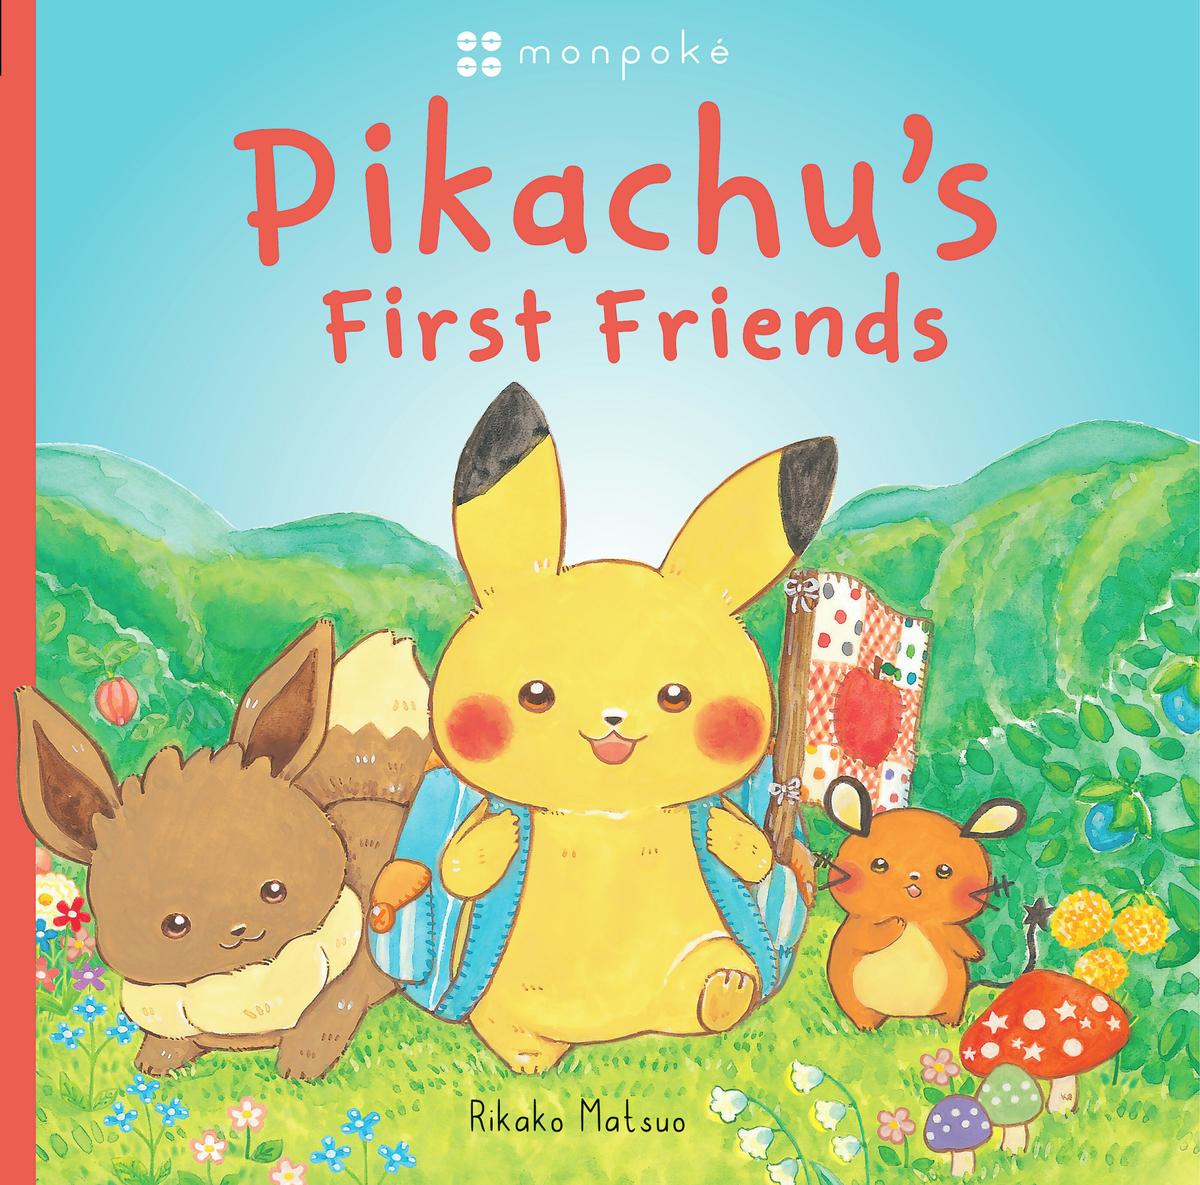 Pikachu's First Friends (Pokémon Monpoke Picture Book) - 